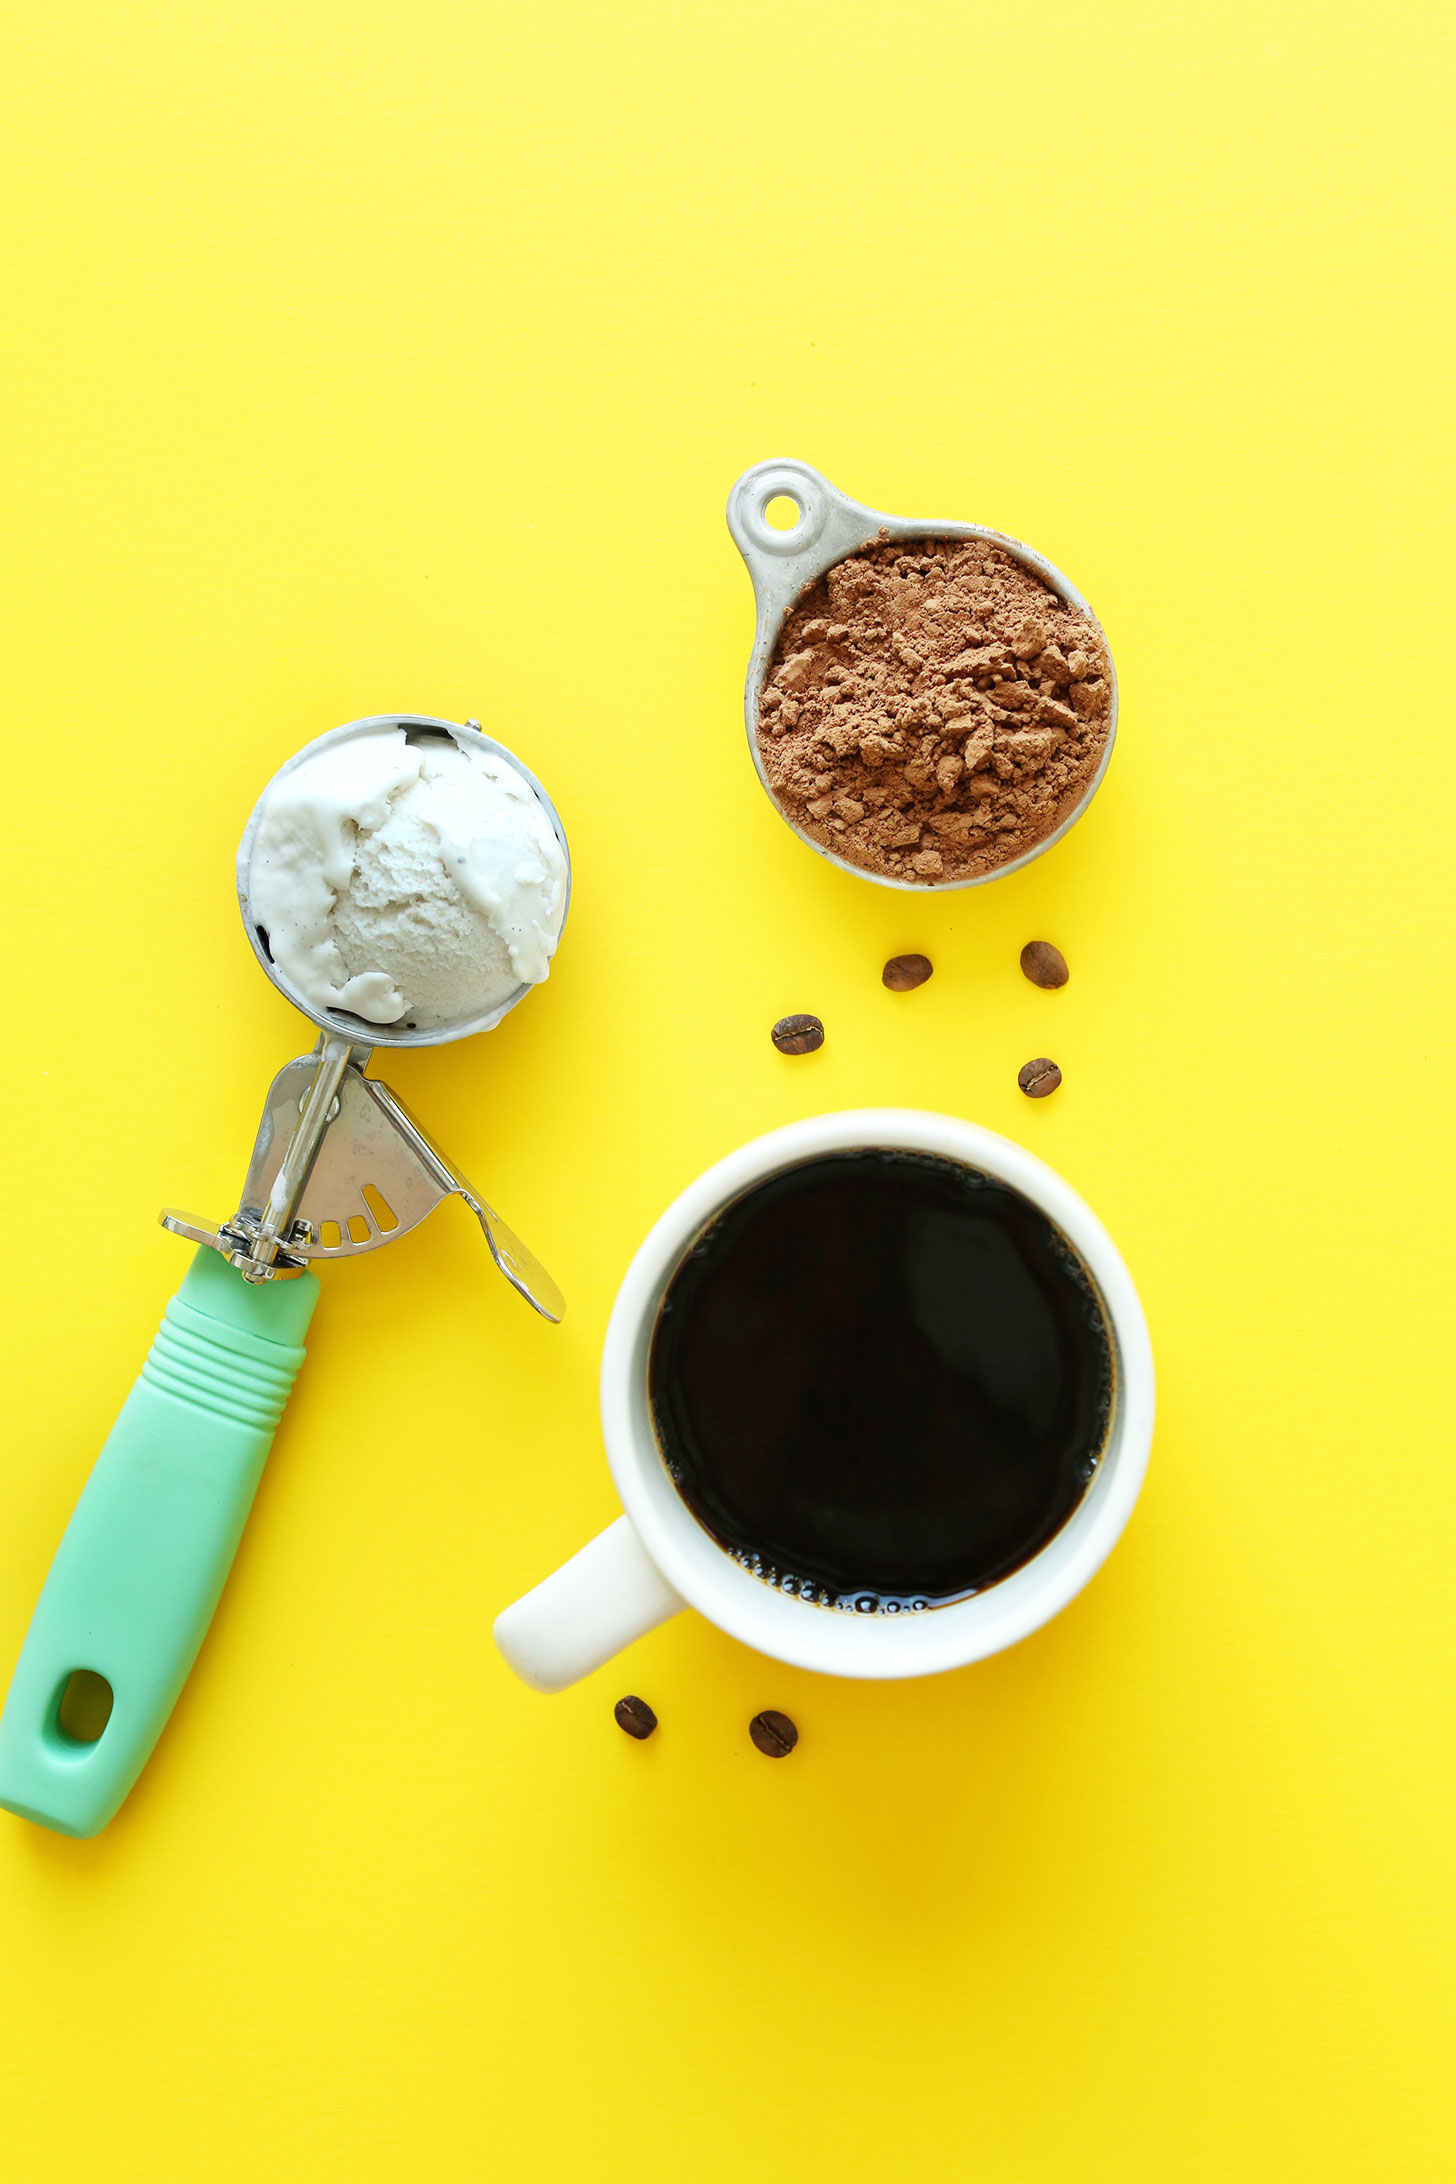 Cocoa powder, vegan ice cream, and coffee for making a delicious vegan milkshake